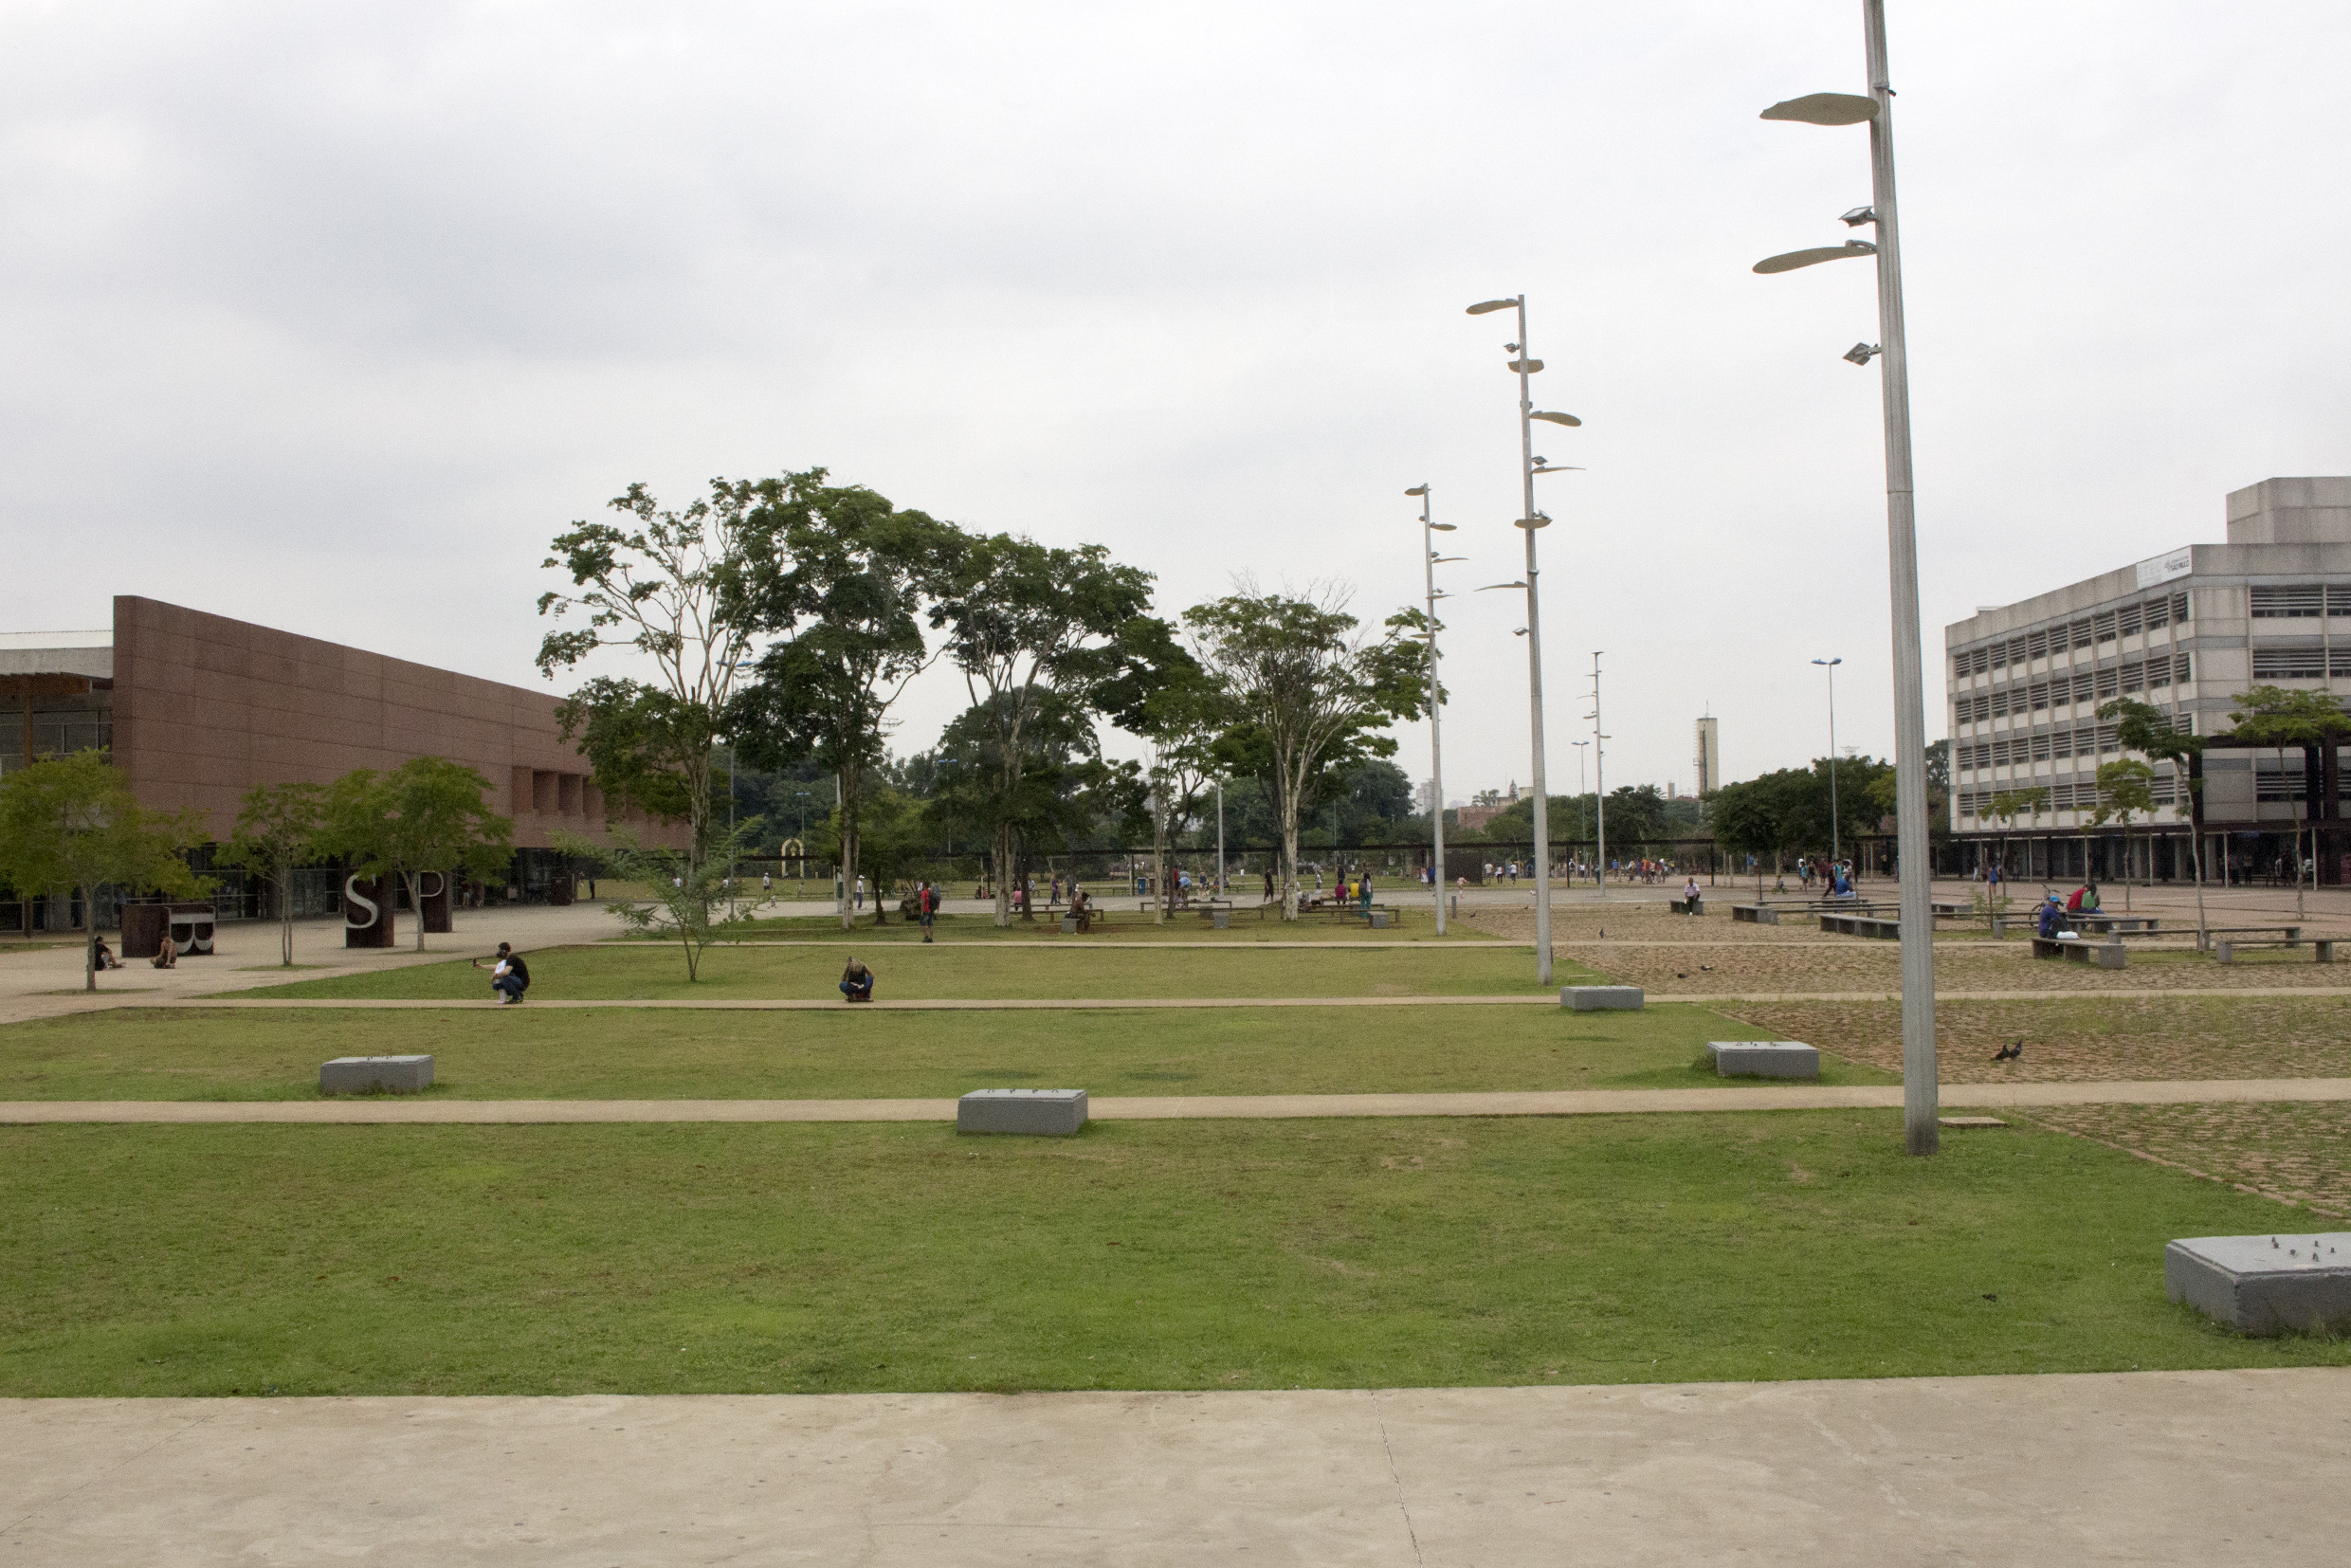 "Parque da Juventude" (former Carandiru penitentiary) - April 19, 2015